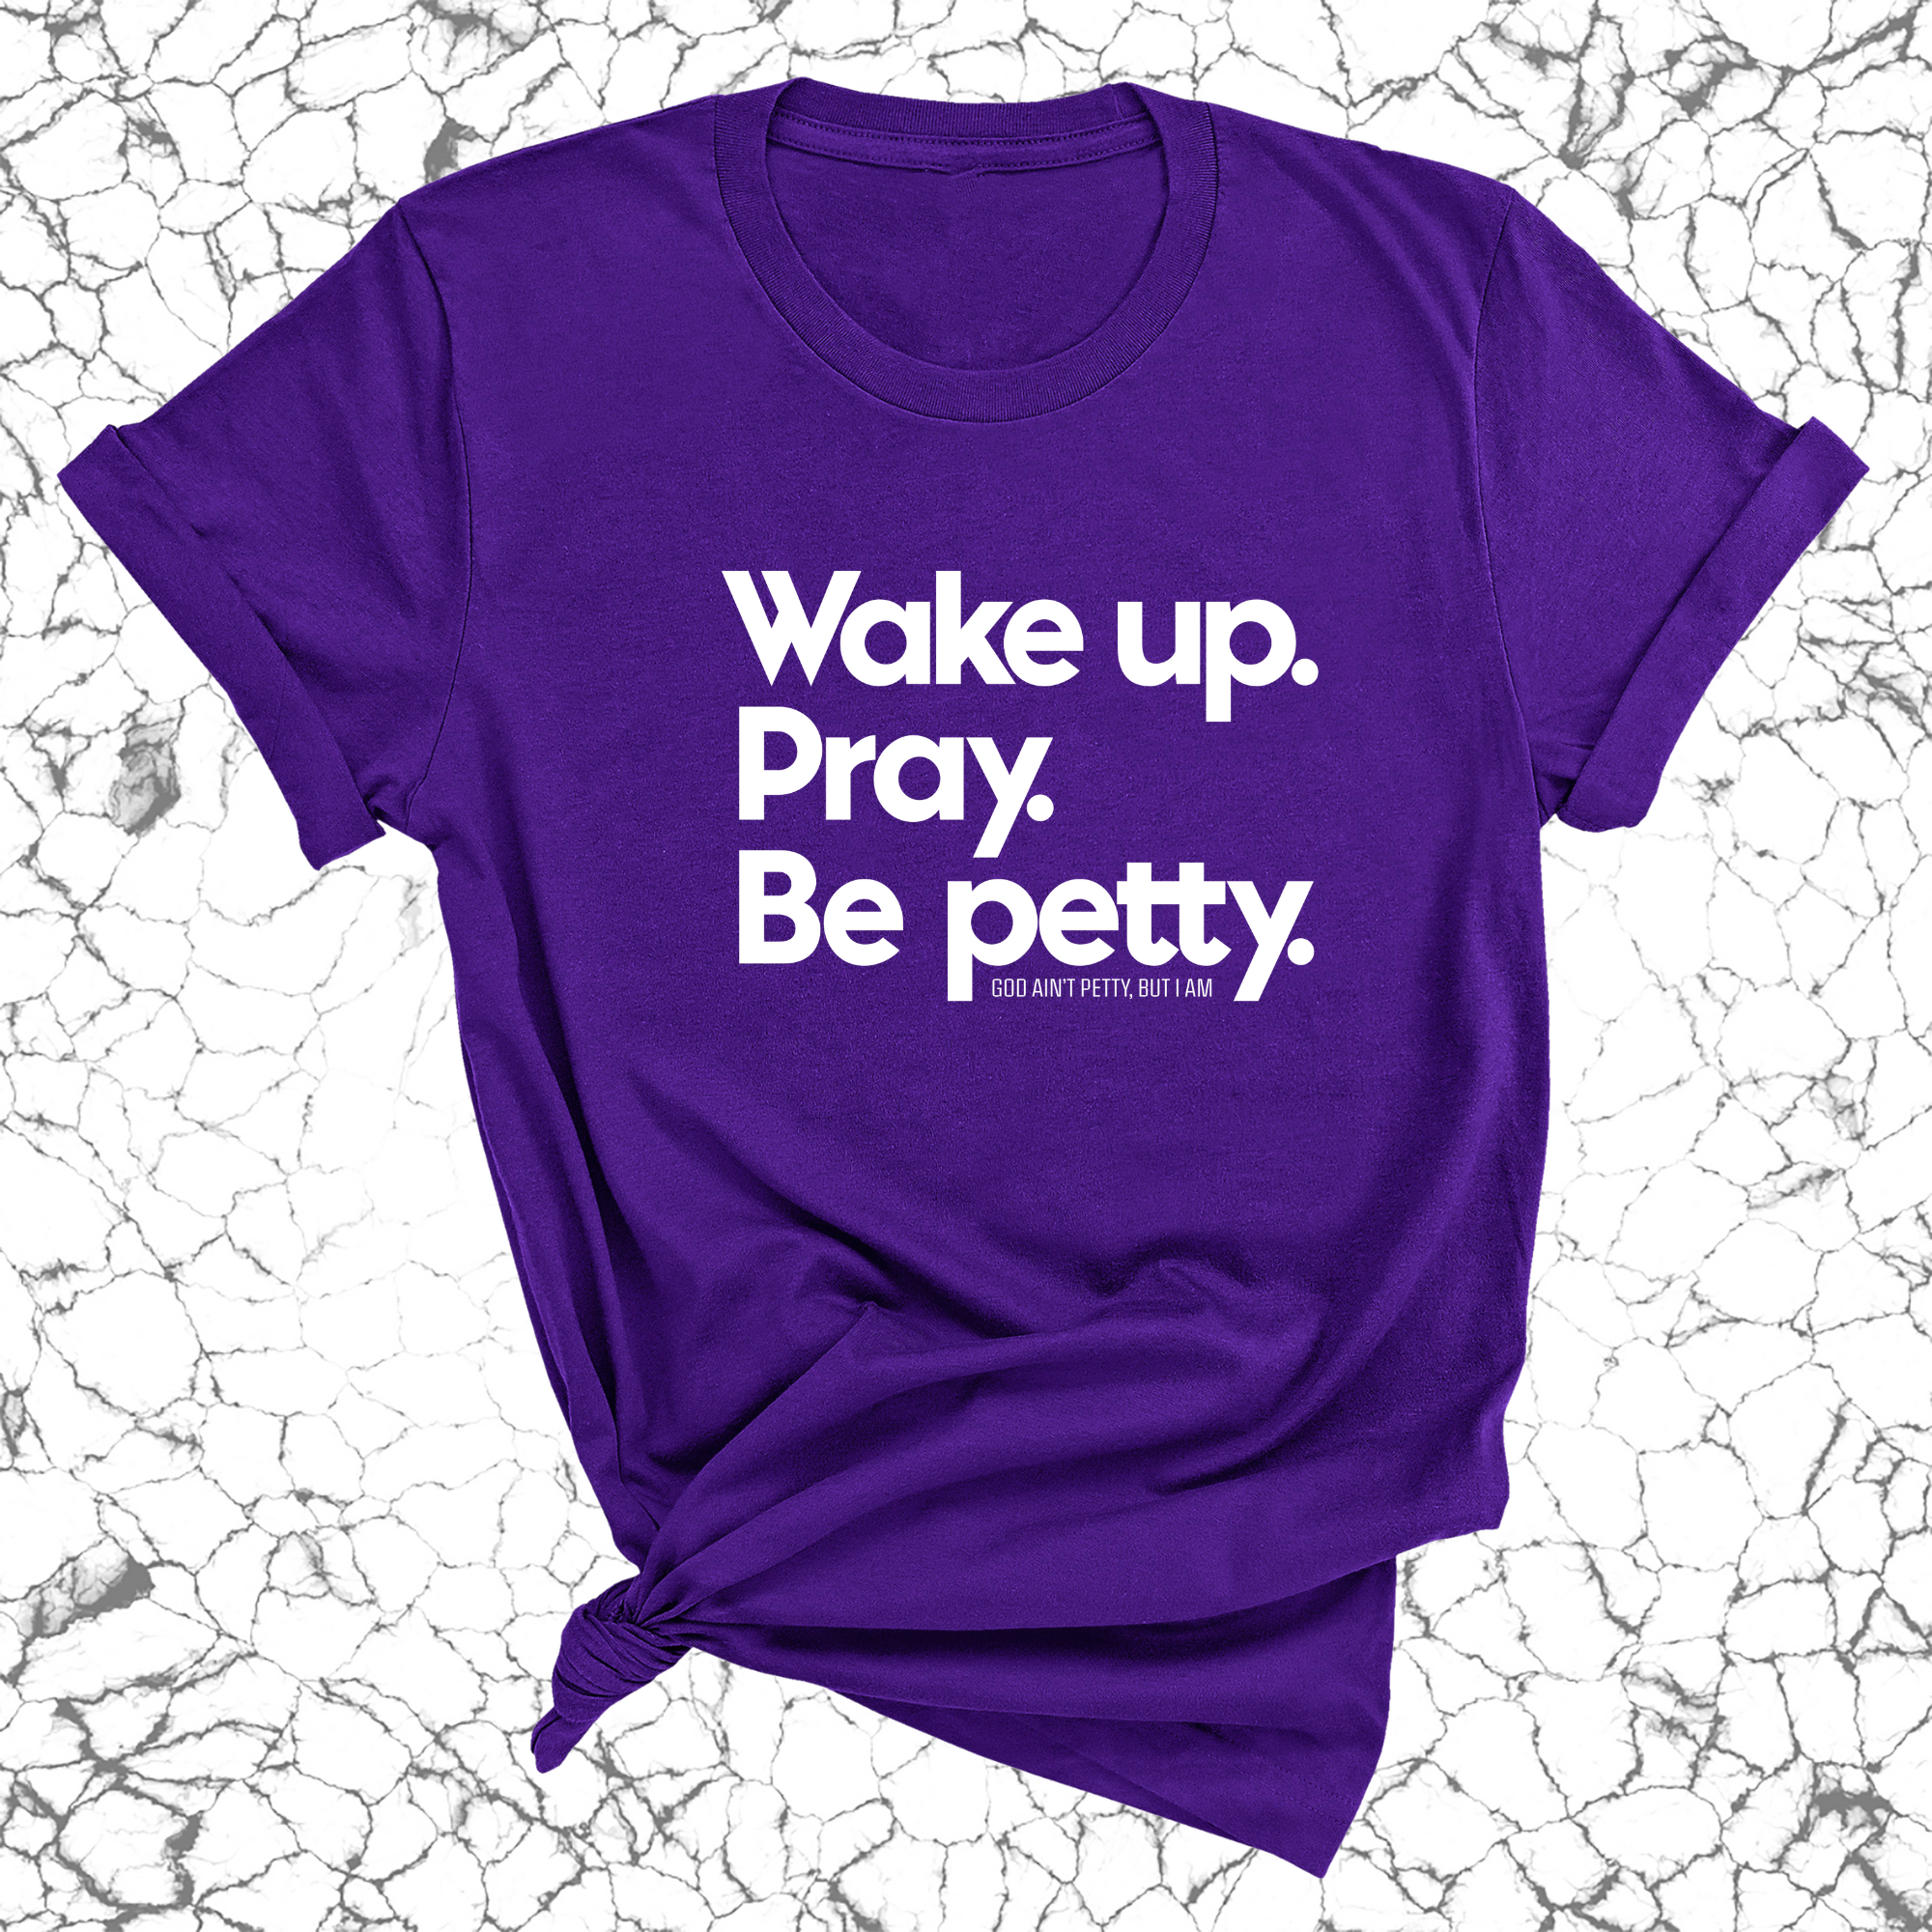 Wake up. Pray. Be Petty Unisex Tee-T-Shirt-The Original God Ain't Petty But I Am